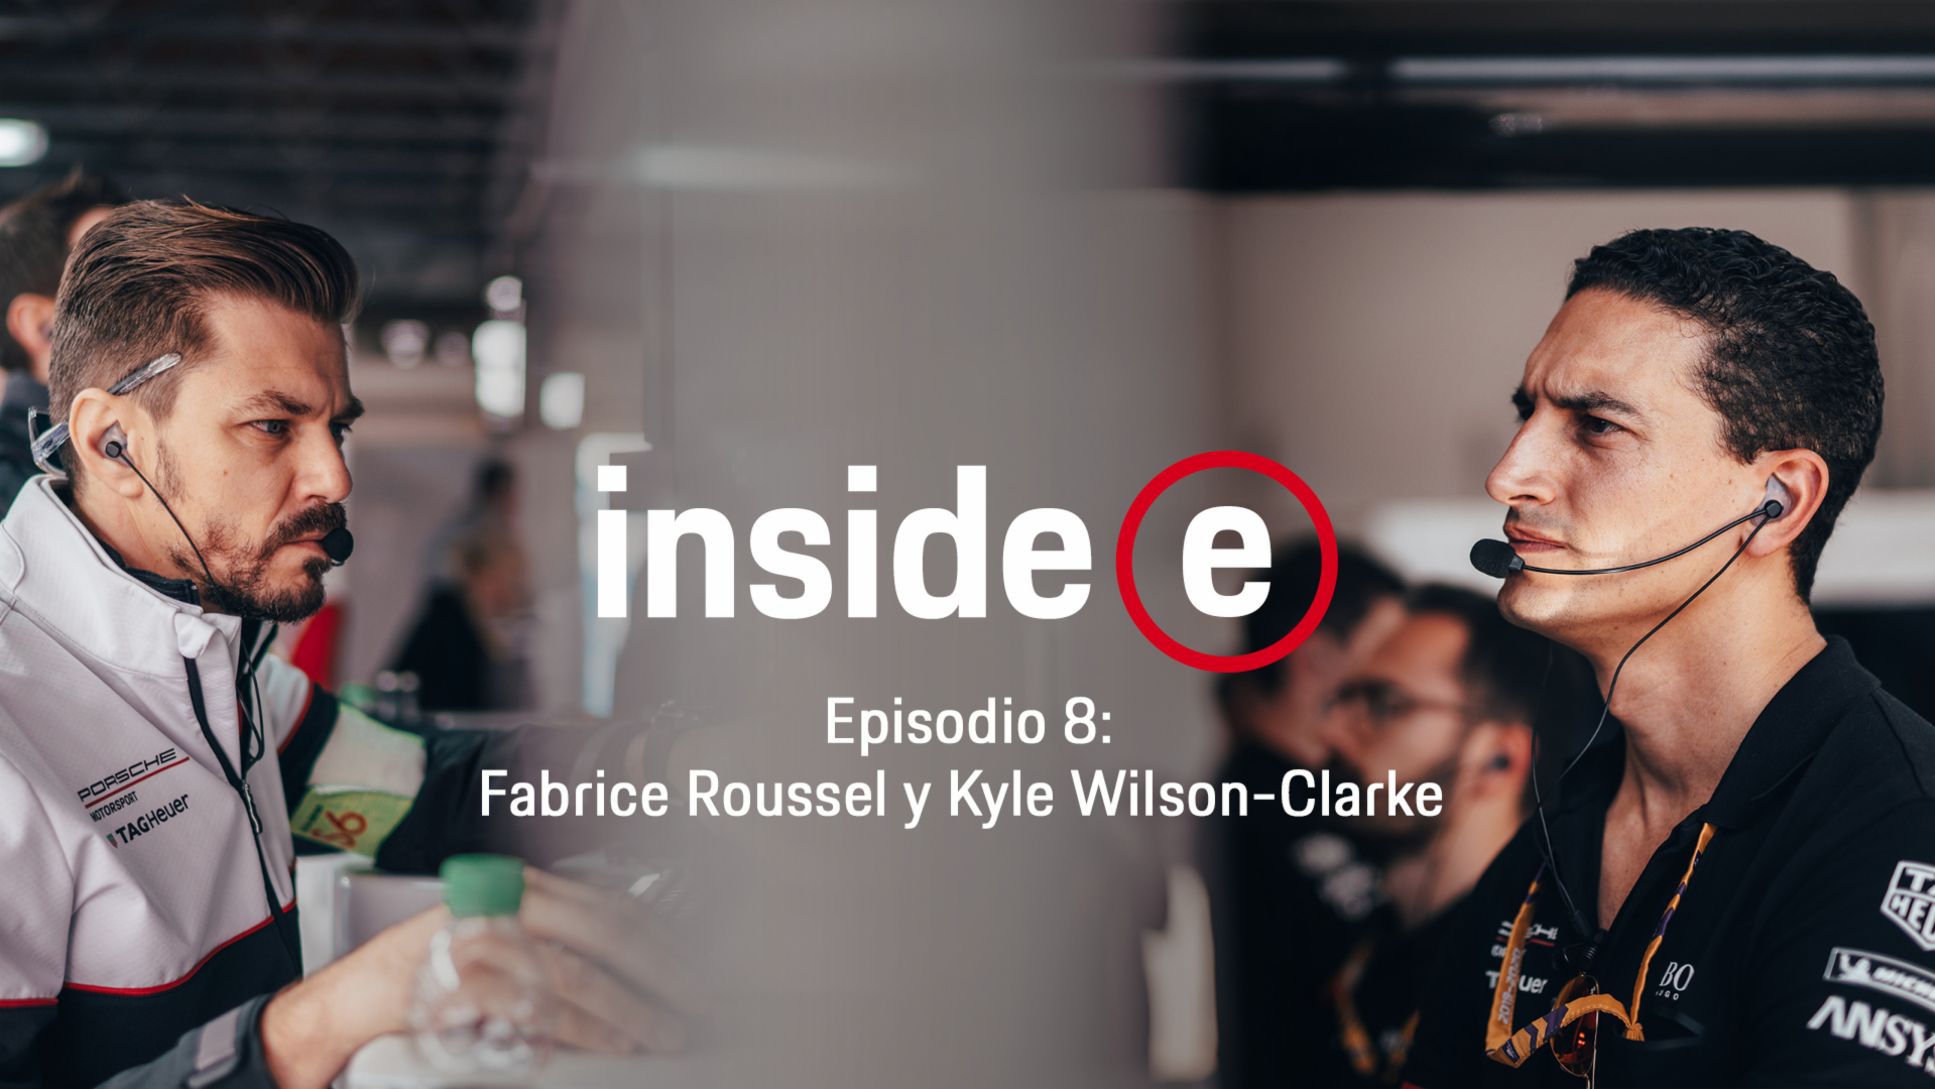 Podcast “Inside E”, episodio 8 con Kyle Wilson-Clarke y Fabrice Roussel, 2020, Porsche AG